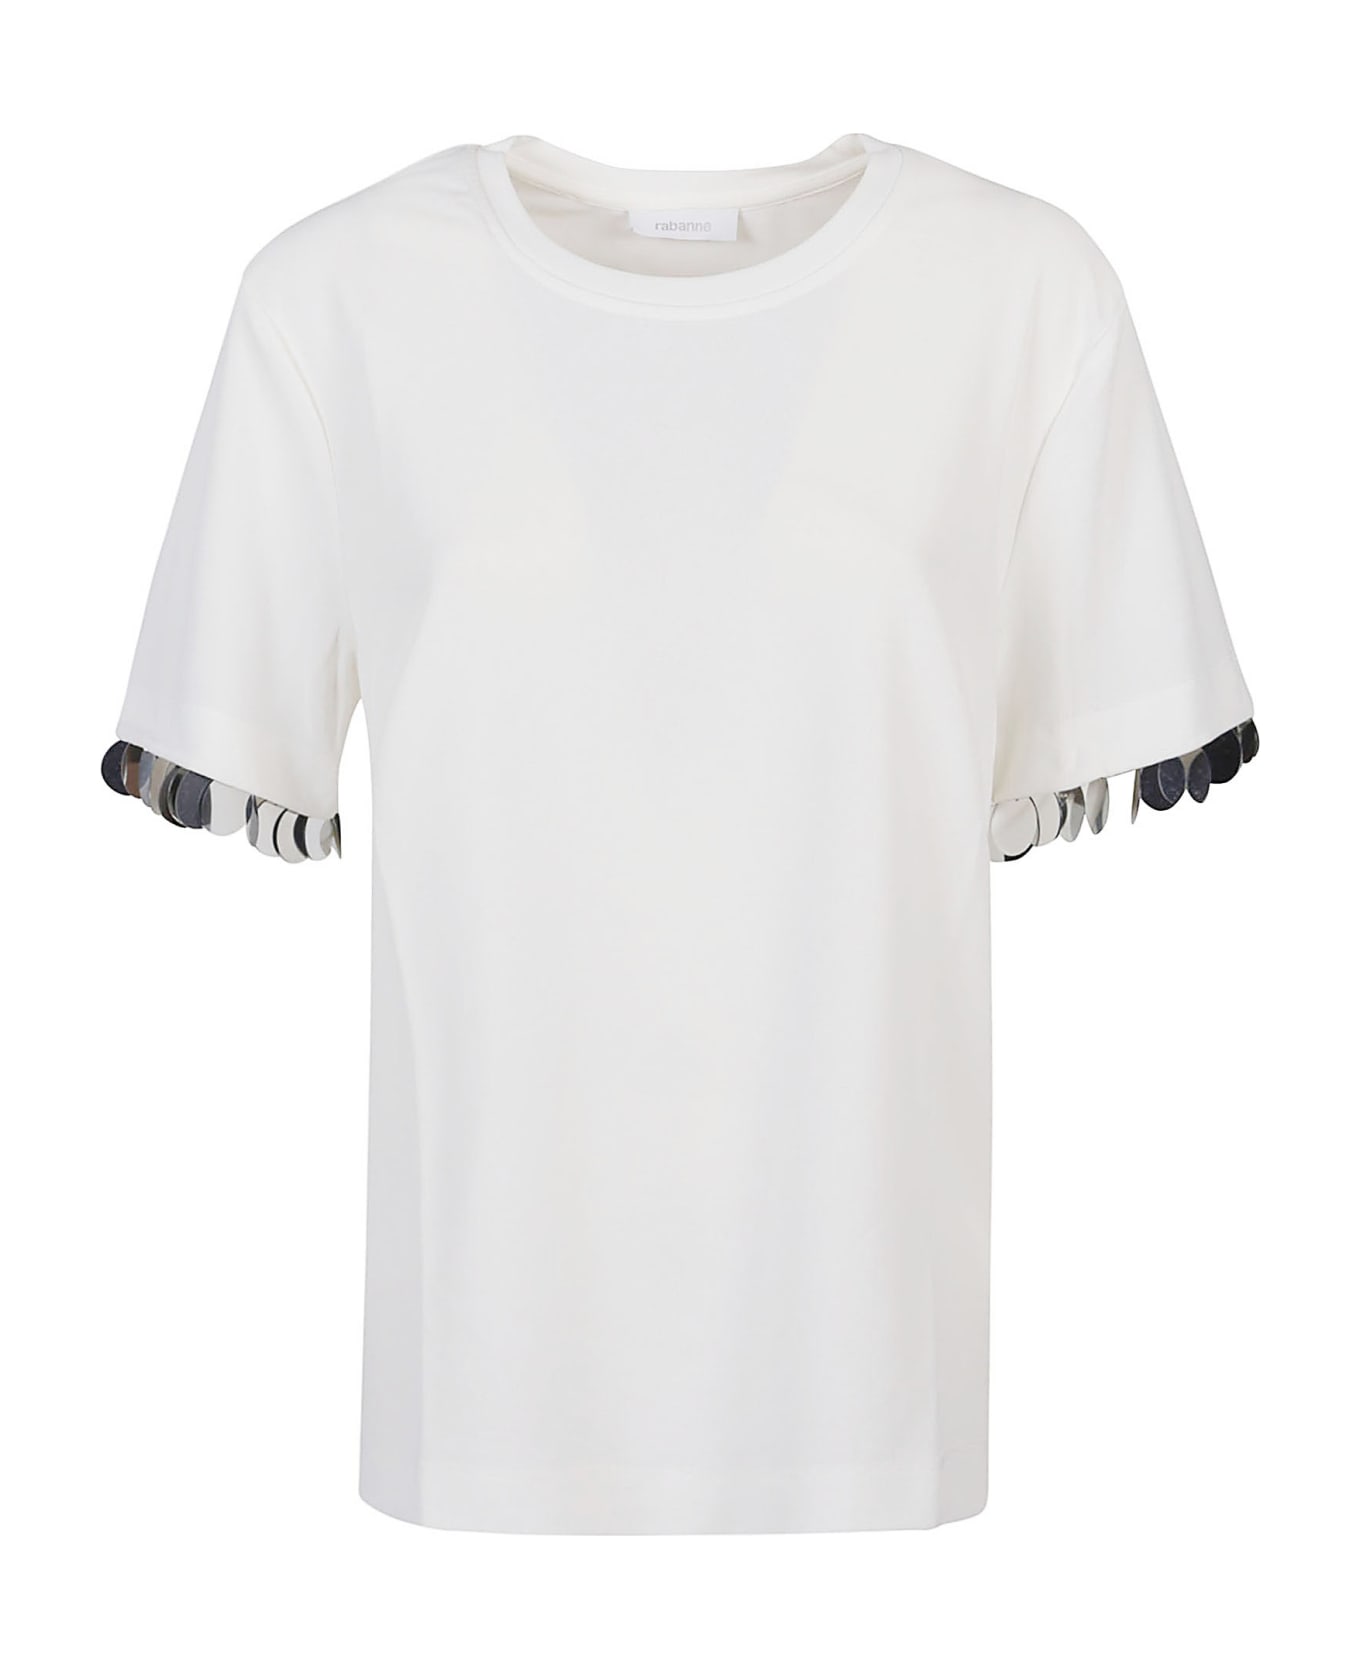 Paco Rabanne T-shirt - White